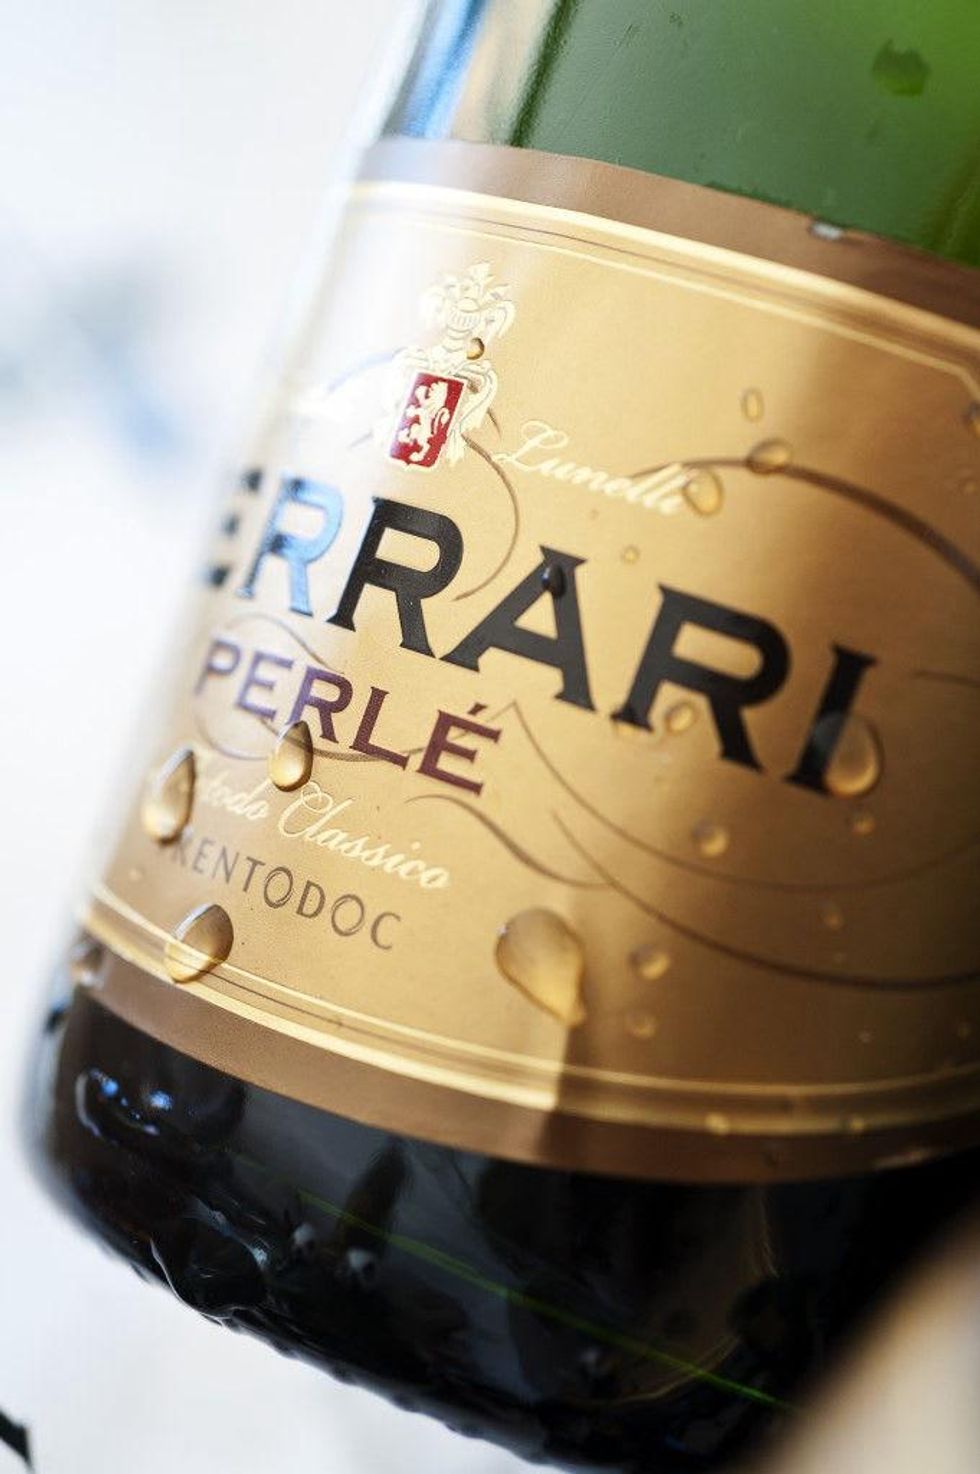 Ferrari Perl\u00e9 wine bottle